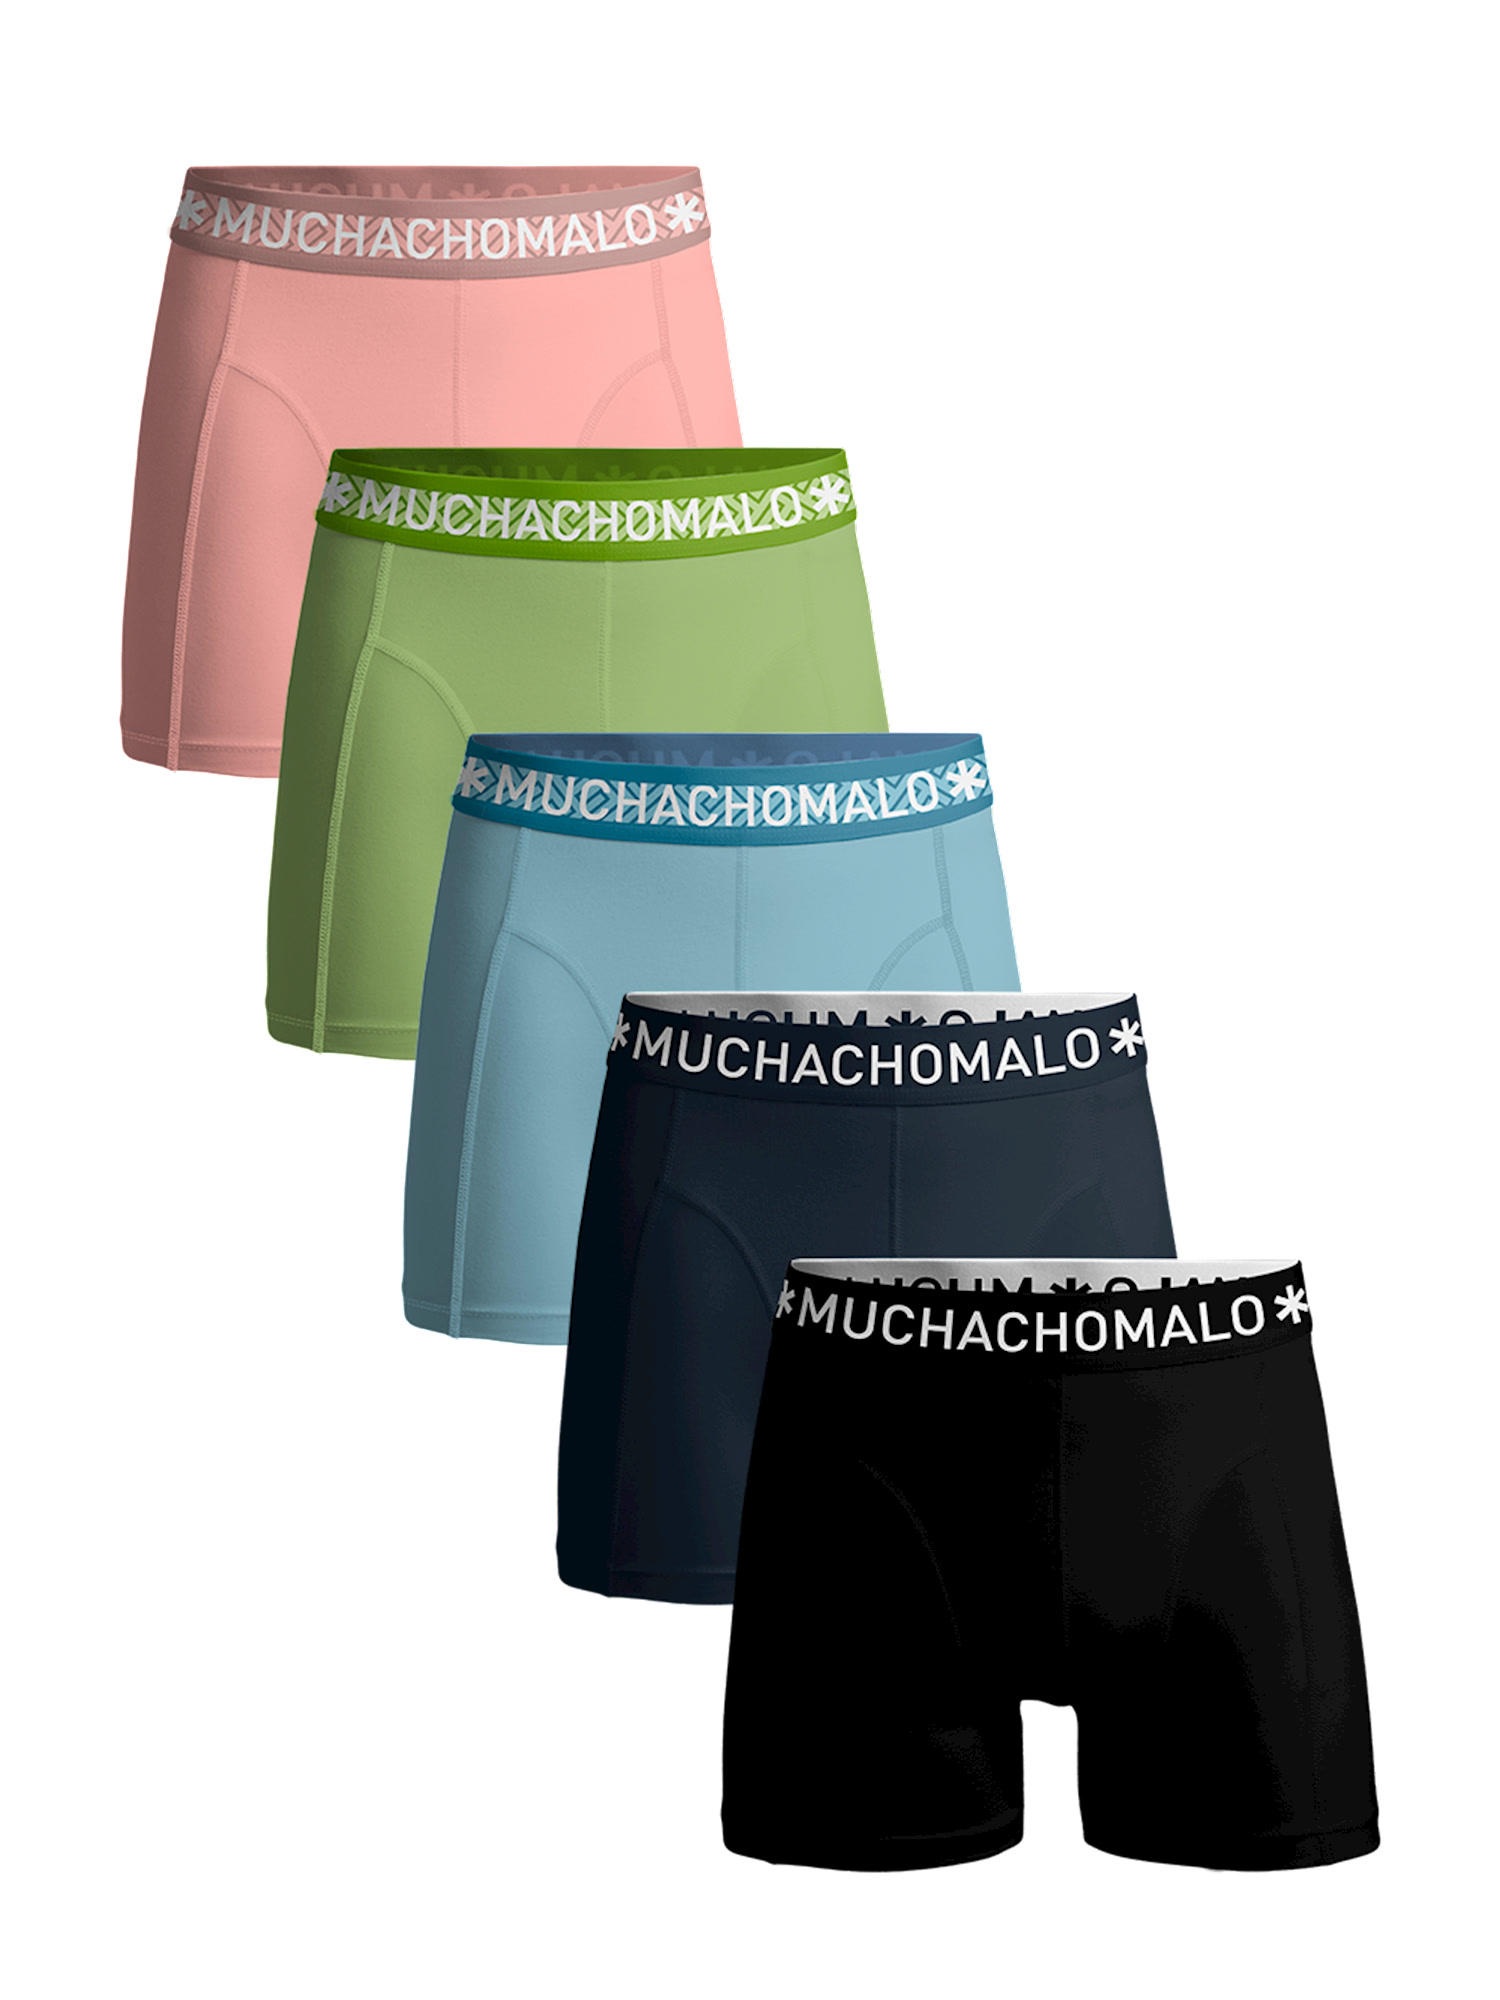 Боксеры Muchachomalo 5er-Set: Boxershorts, цвет Black/Blue/Blue/Green/Pink боксеры muchachomalo 5er set boxershorts цвет black blue blue green green